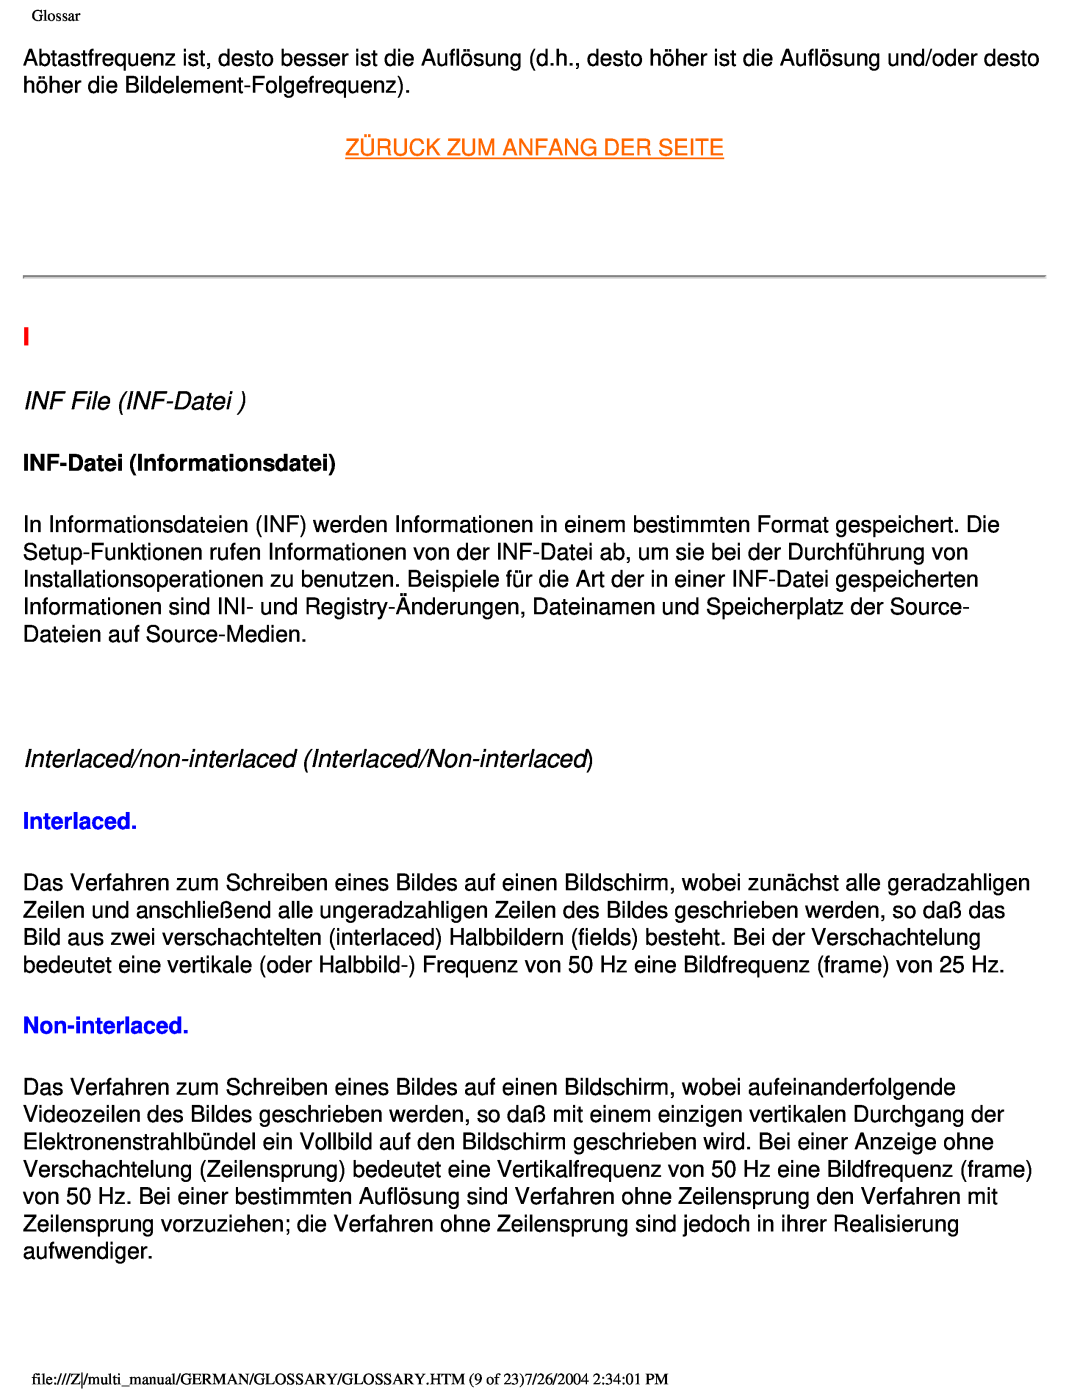 Philips 107X2 INF File INF-Datei, Interlaced/non-interlaced Interlaced/Non-interlaced, Züruck Zum Anfang Der Seite 